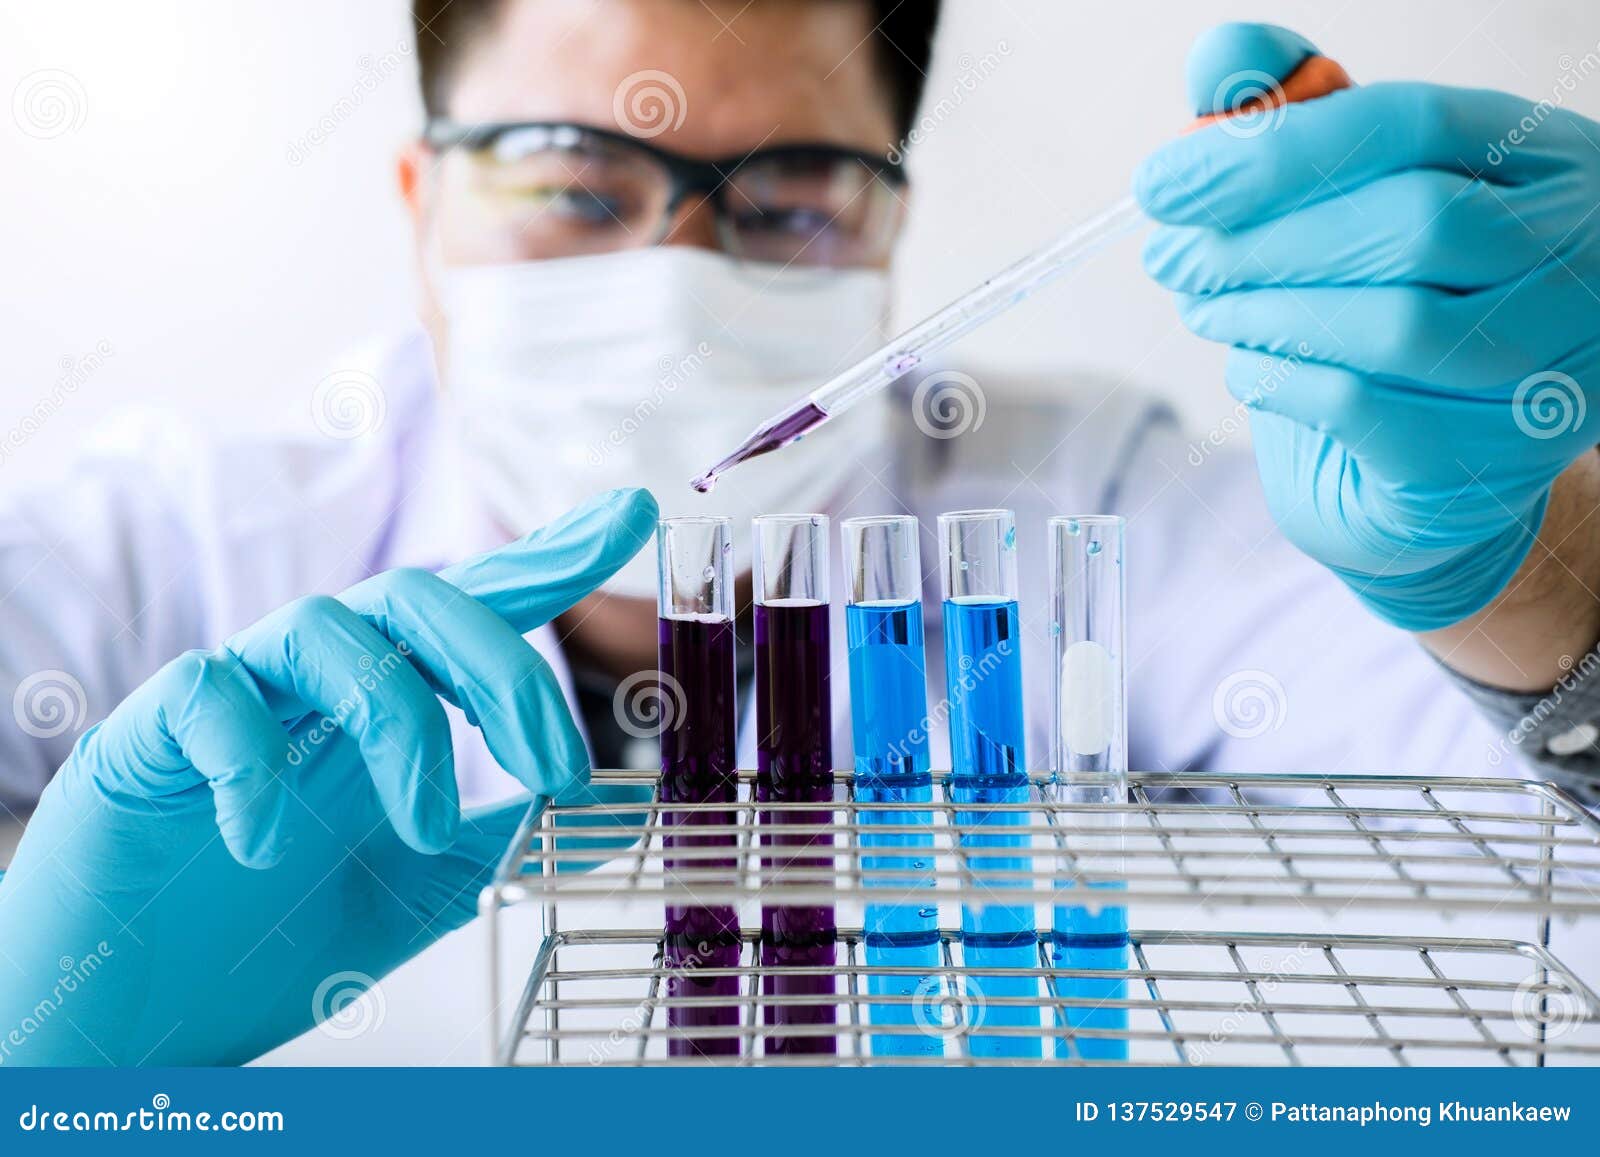 biochemistry research